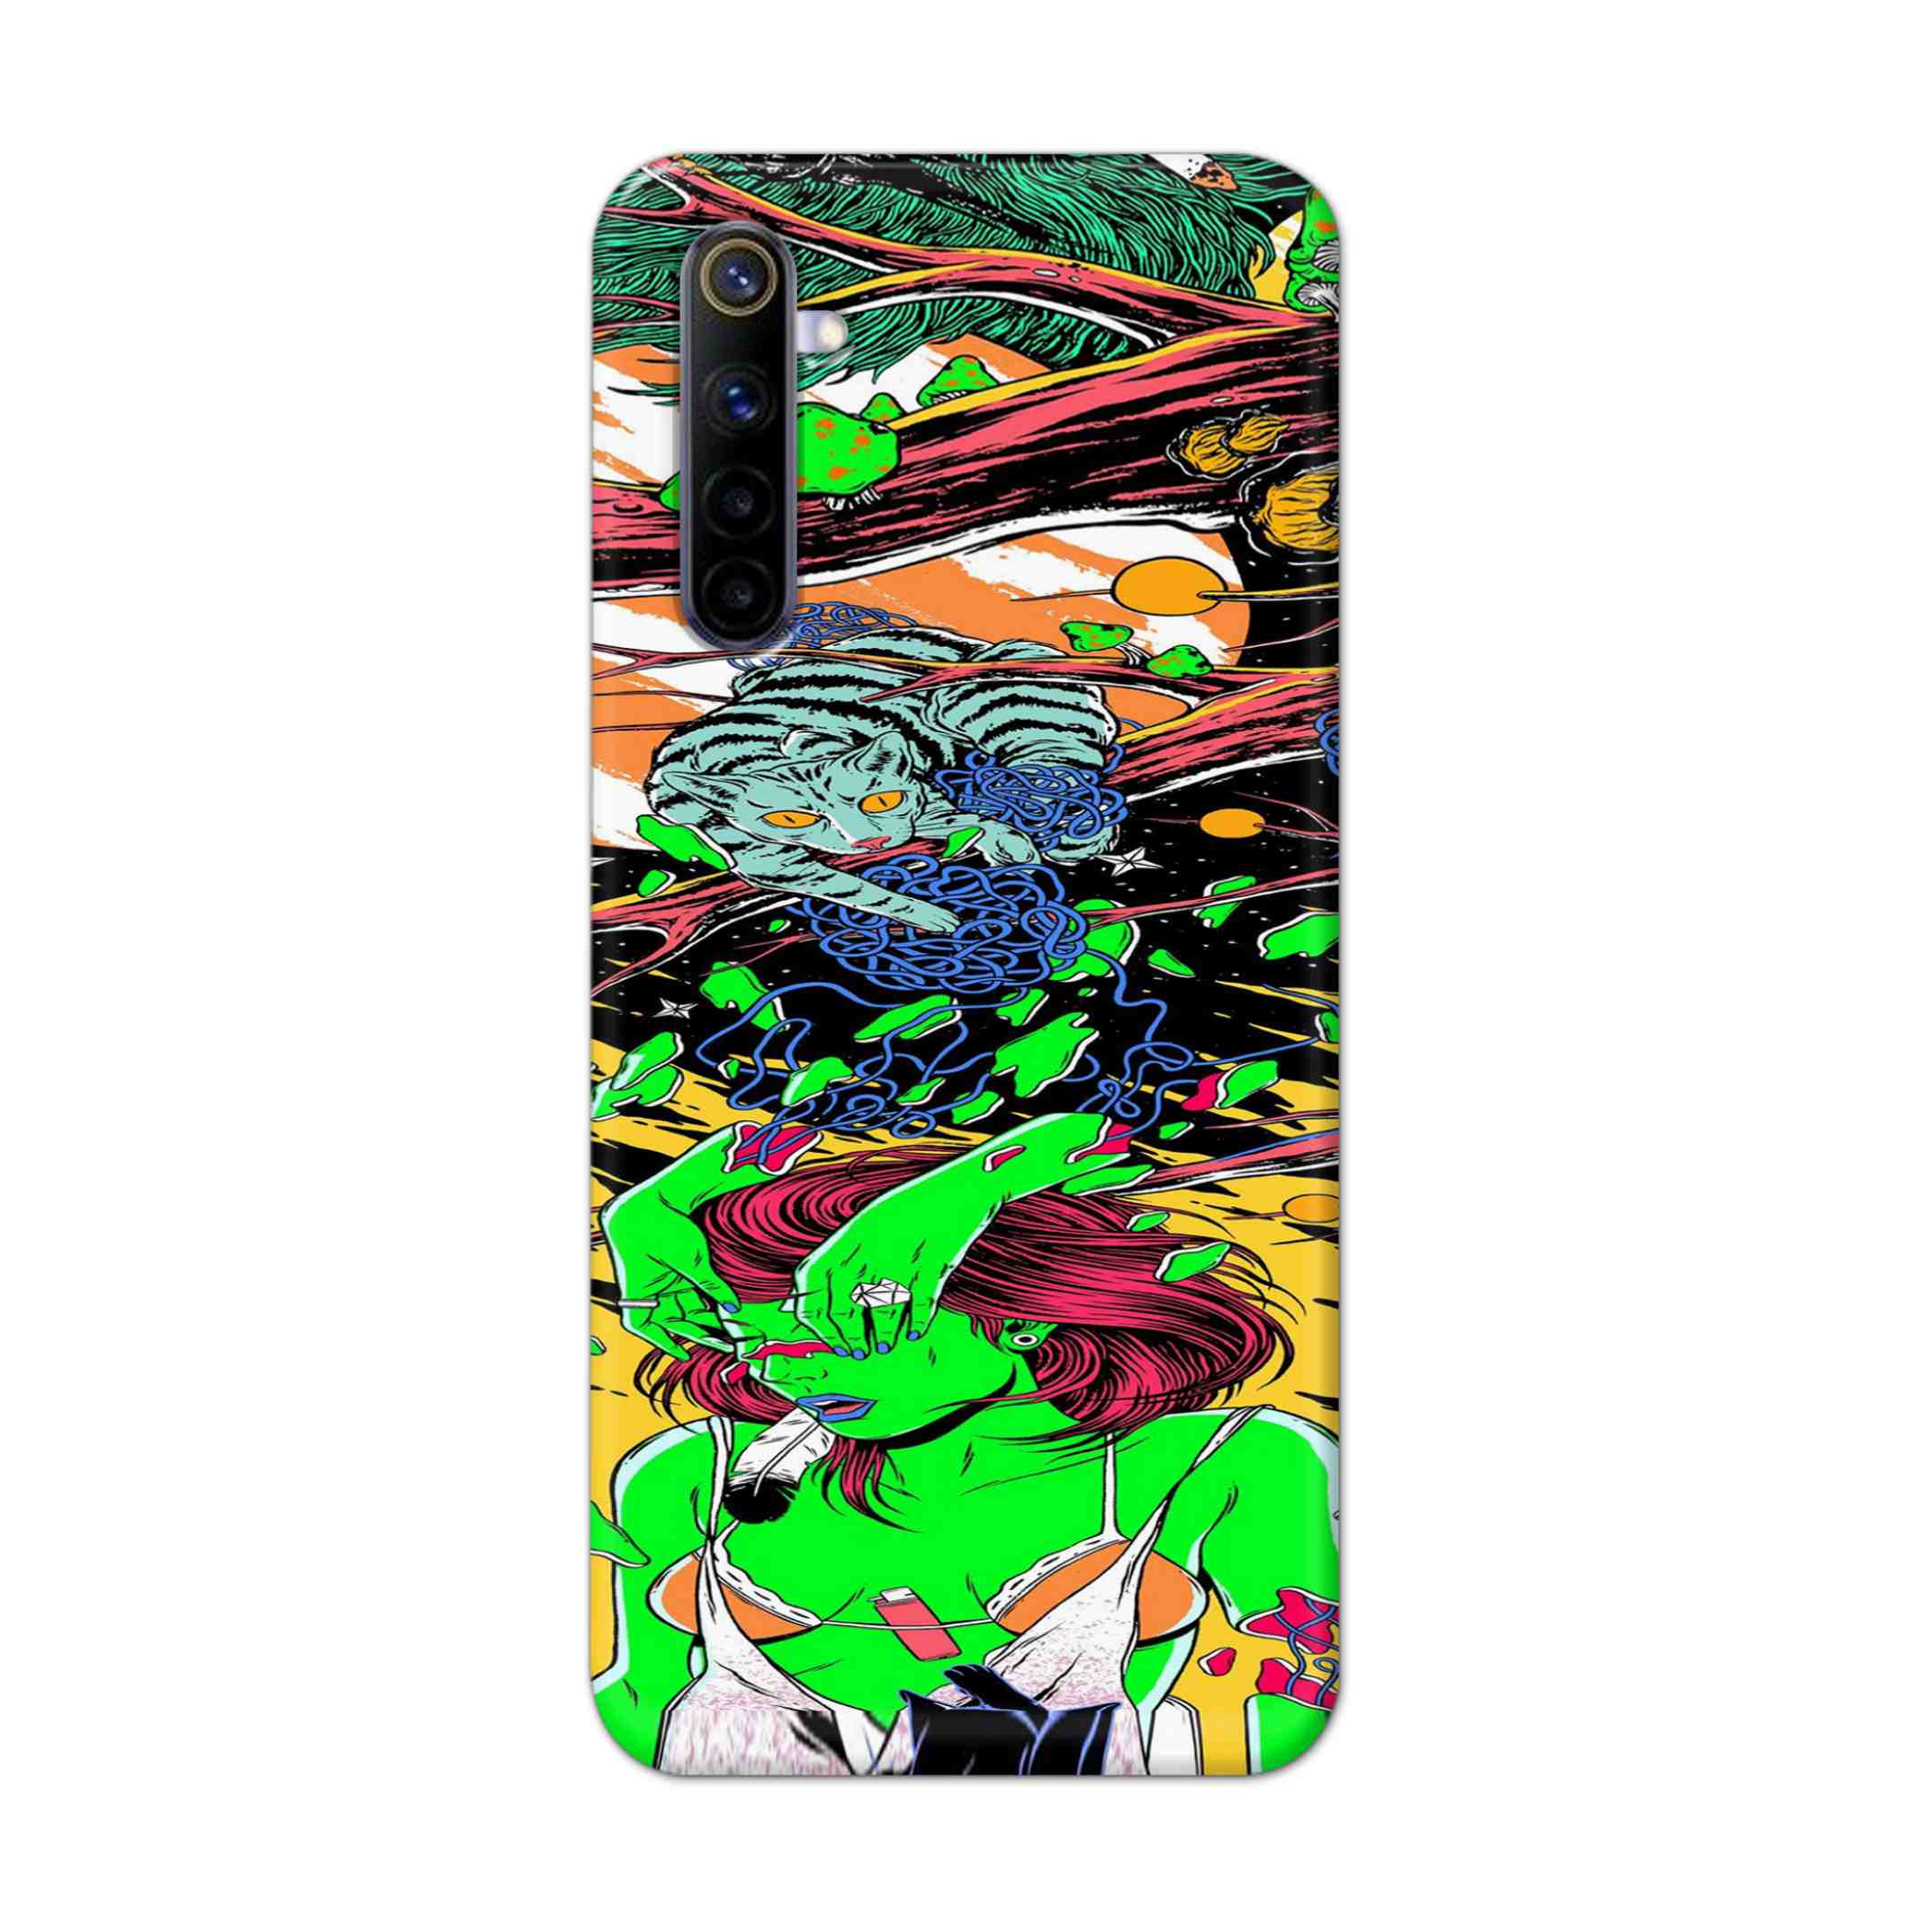 Buy Green Girl Art Hard Back Mobile Phone Case Cover For REALME 6 PRO Online